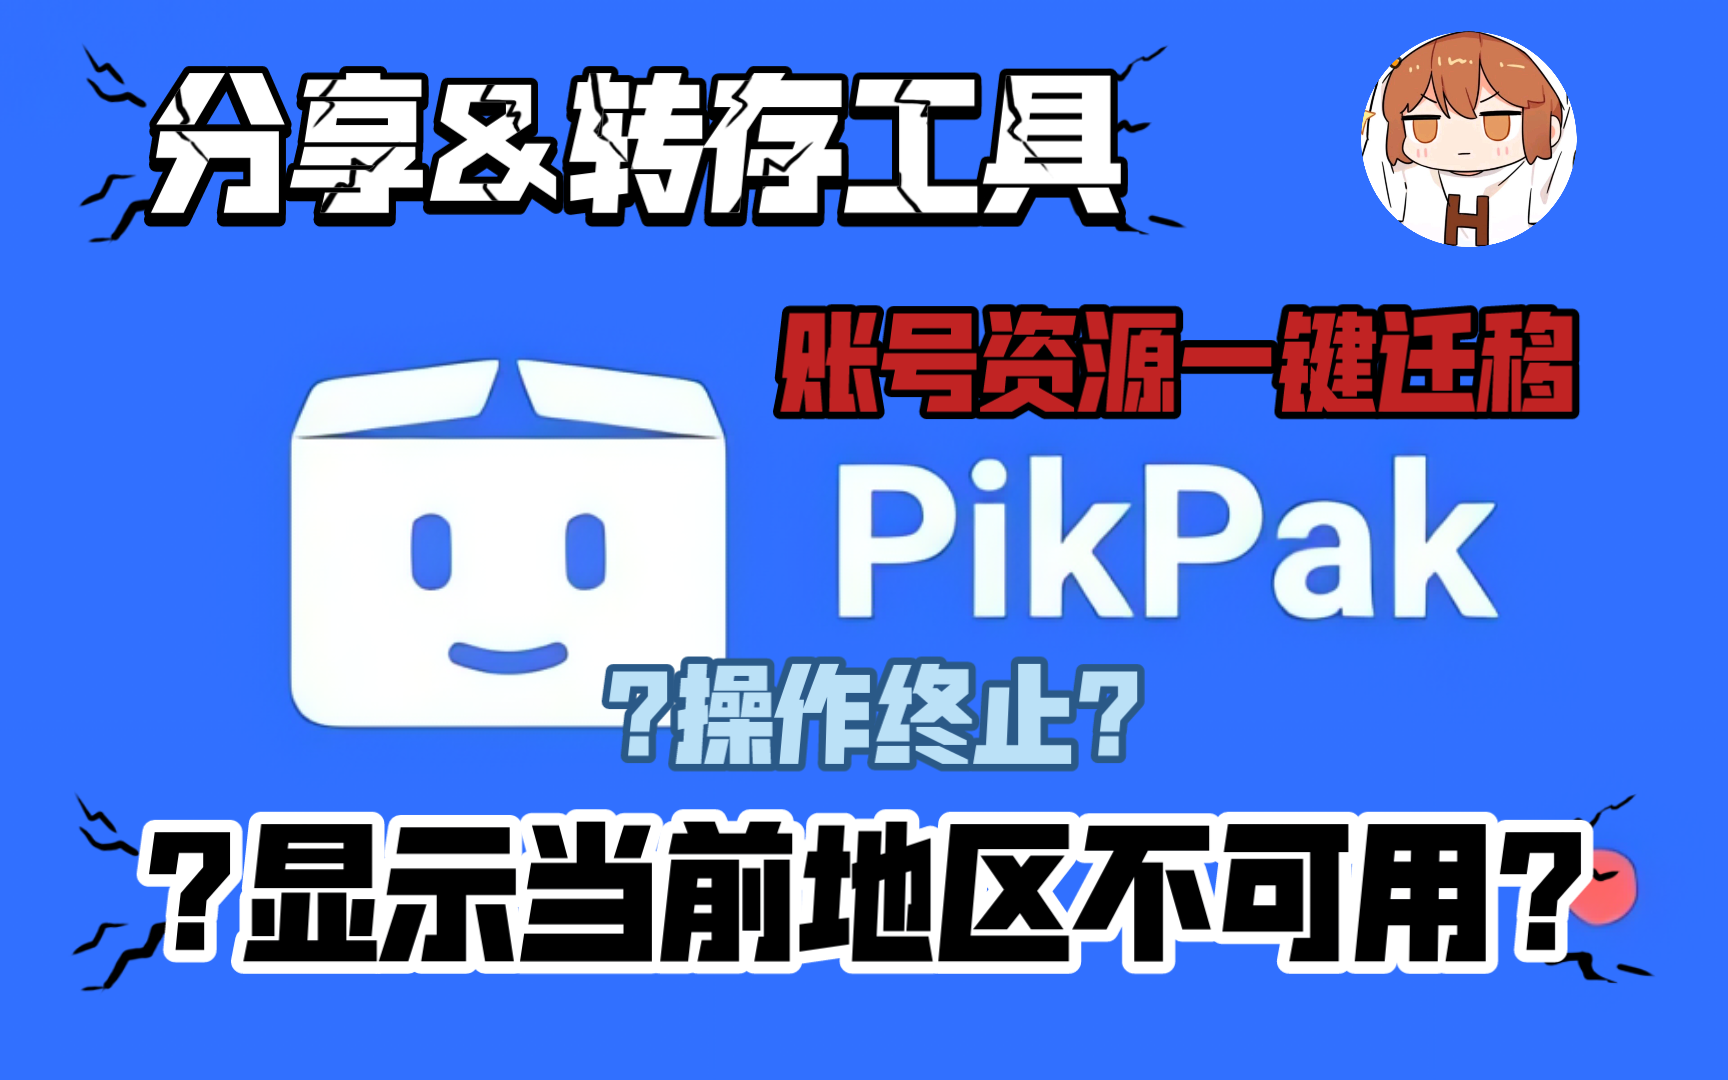 Pikpak一键分享&转存工具，解除地区功能限制！